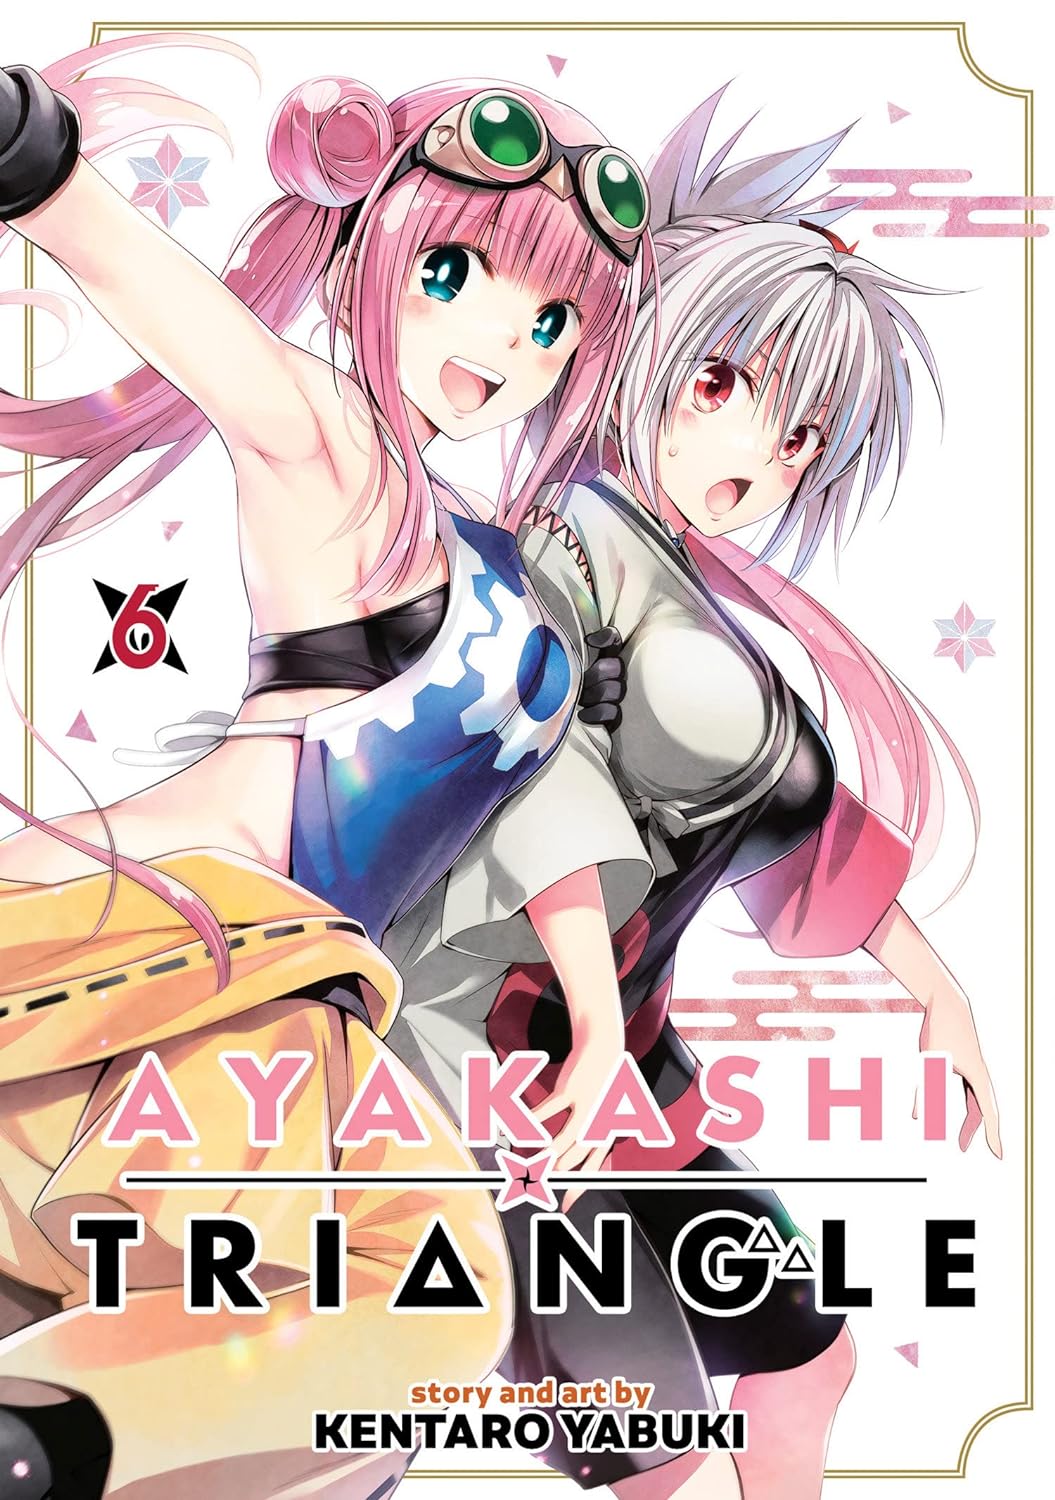 Ayakashi Triangle - Volume 6 | Kentaro Yabuki